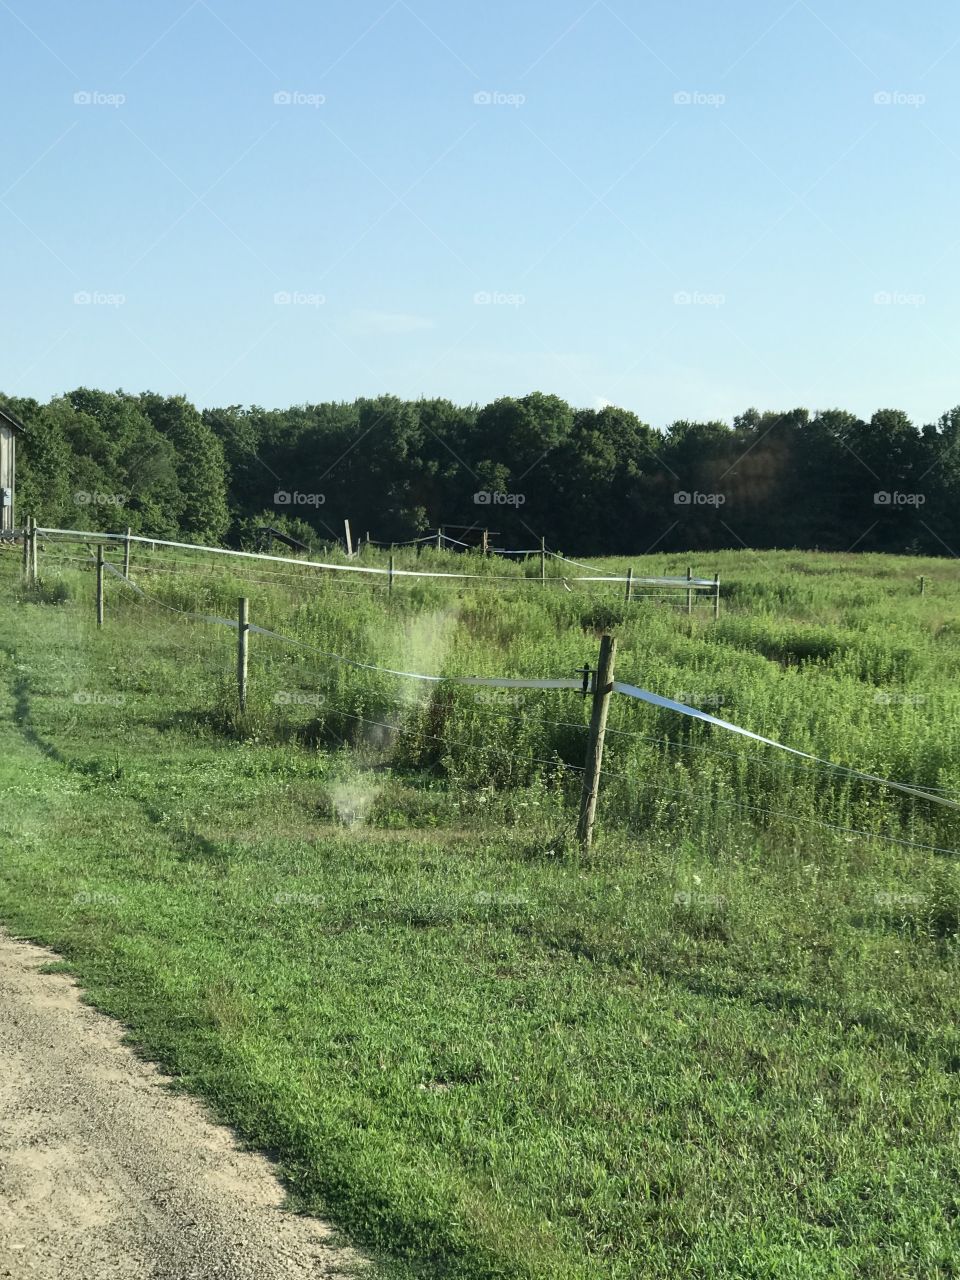 Tape fence around pasture 